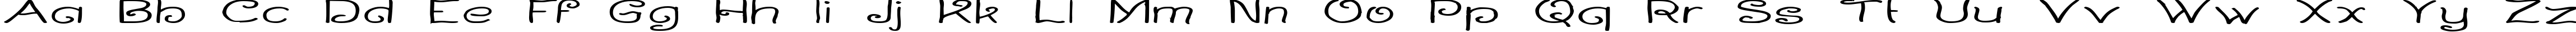 Пример написания английского алфавита шрифтом Curlmudgeon Wideside